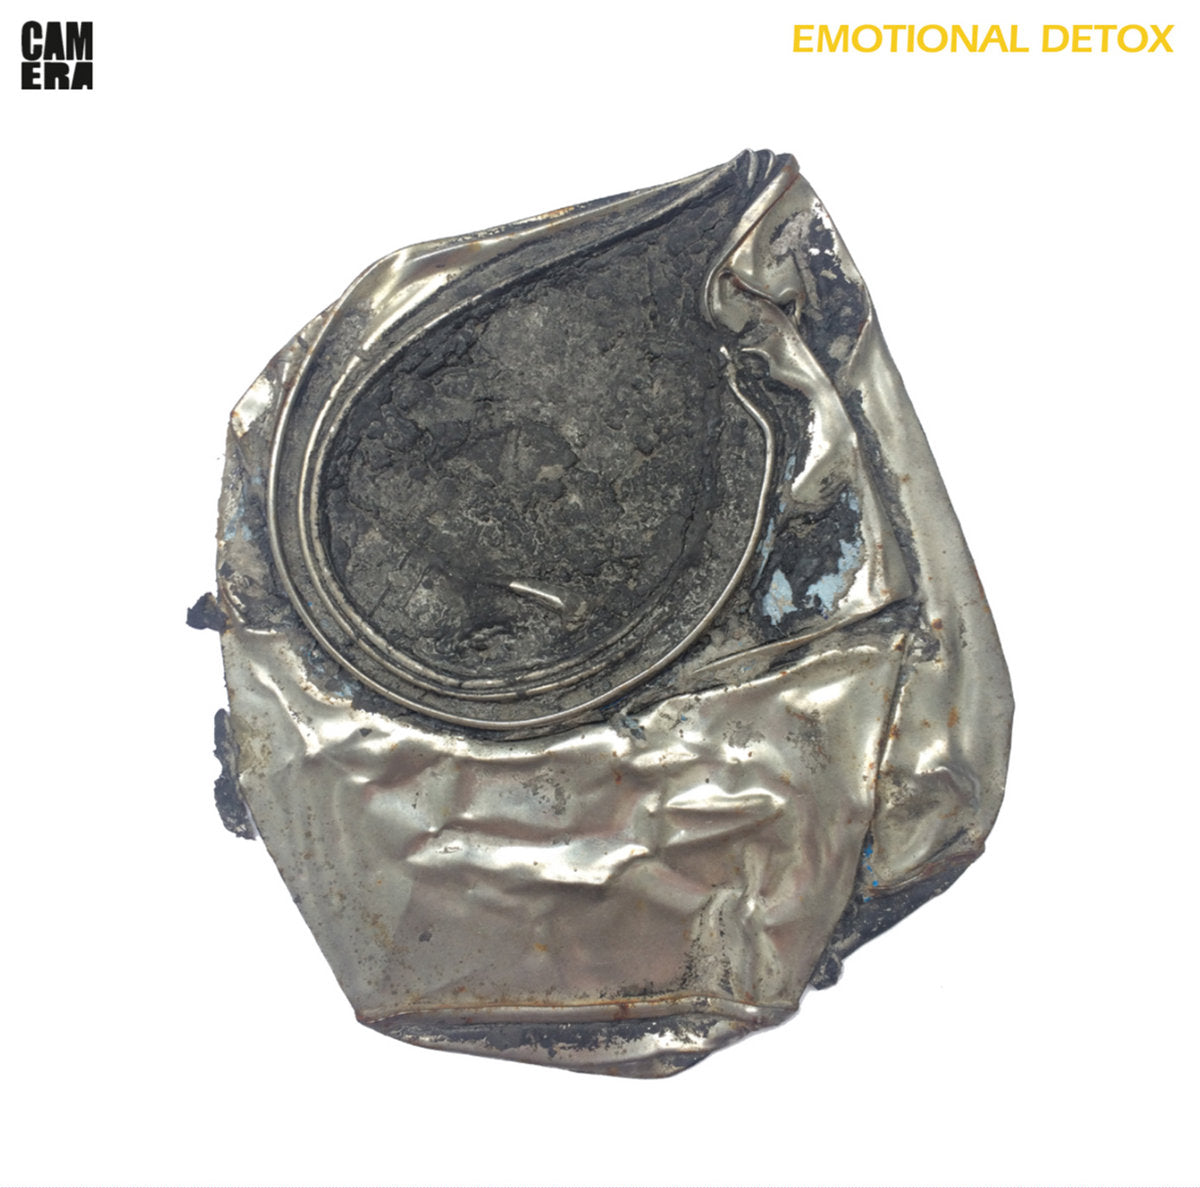 Camera - Emotional Detox - LP